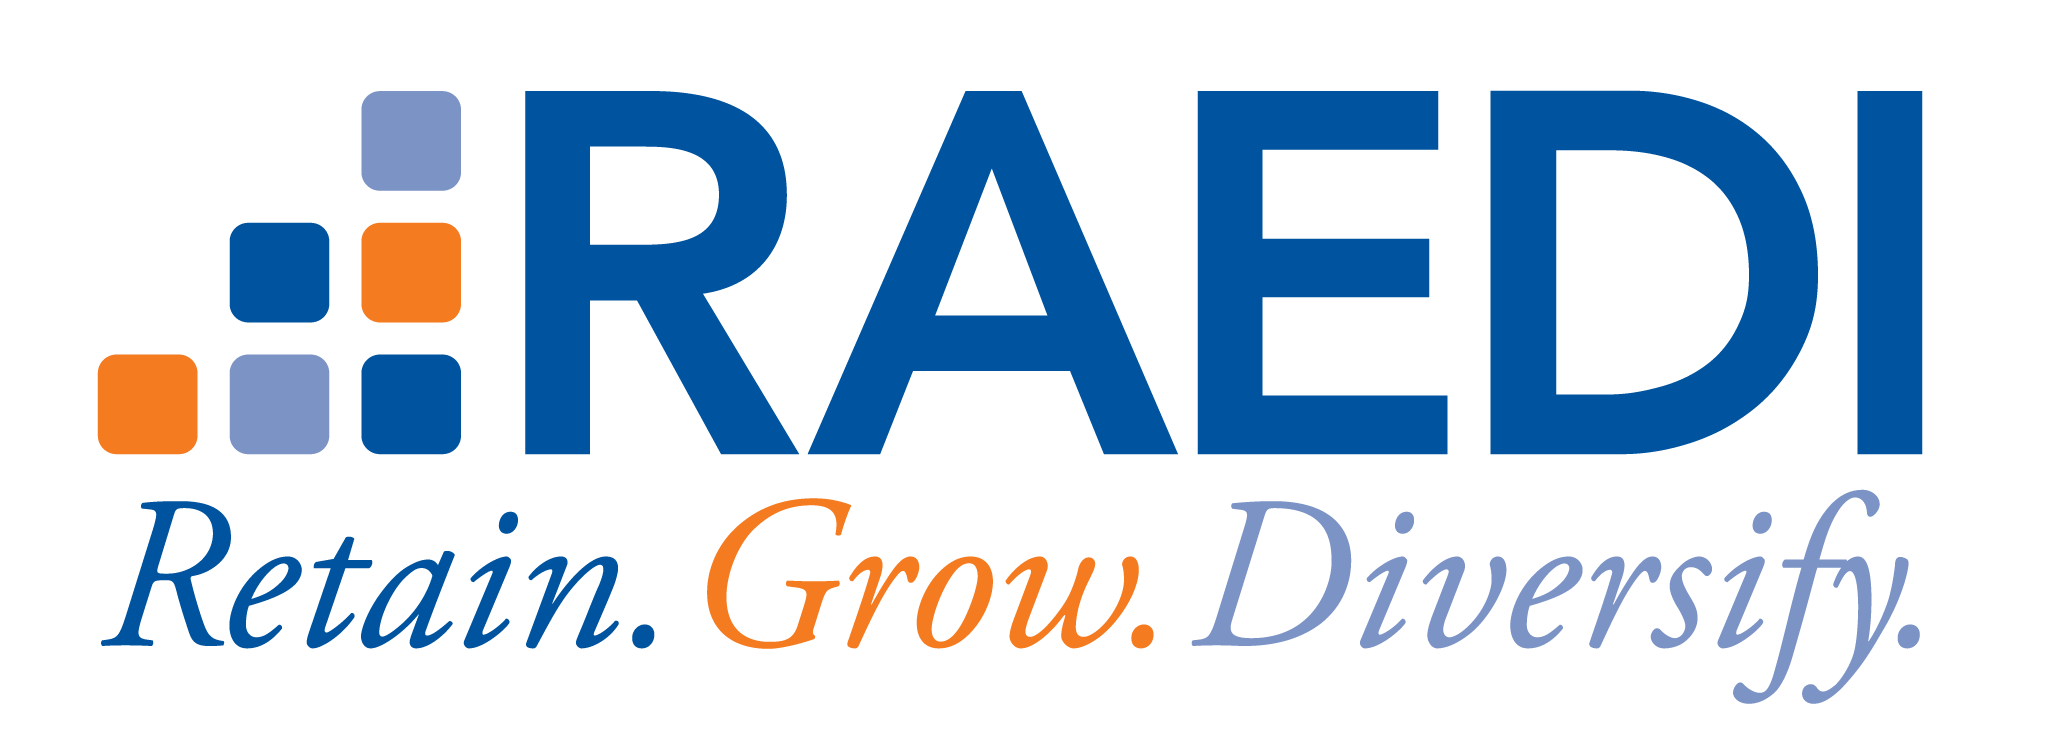 Rochester Area Economic Development Inc. - Retain. Grow. Diversifiy.